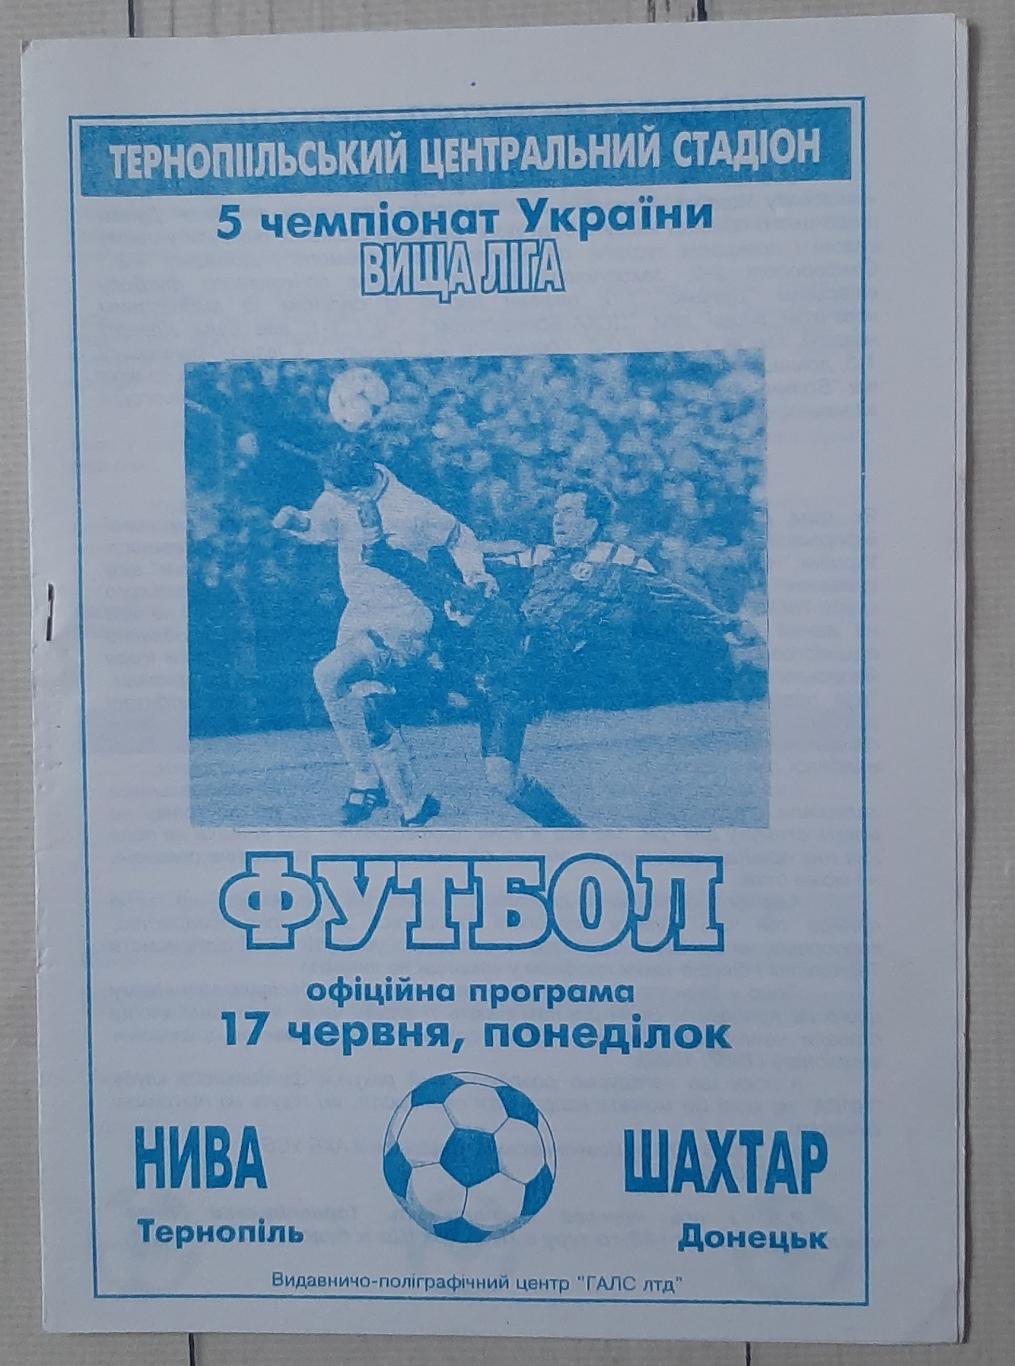 Нива Тернопіль - Шахтар Донецьк 17.06.1996.